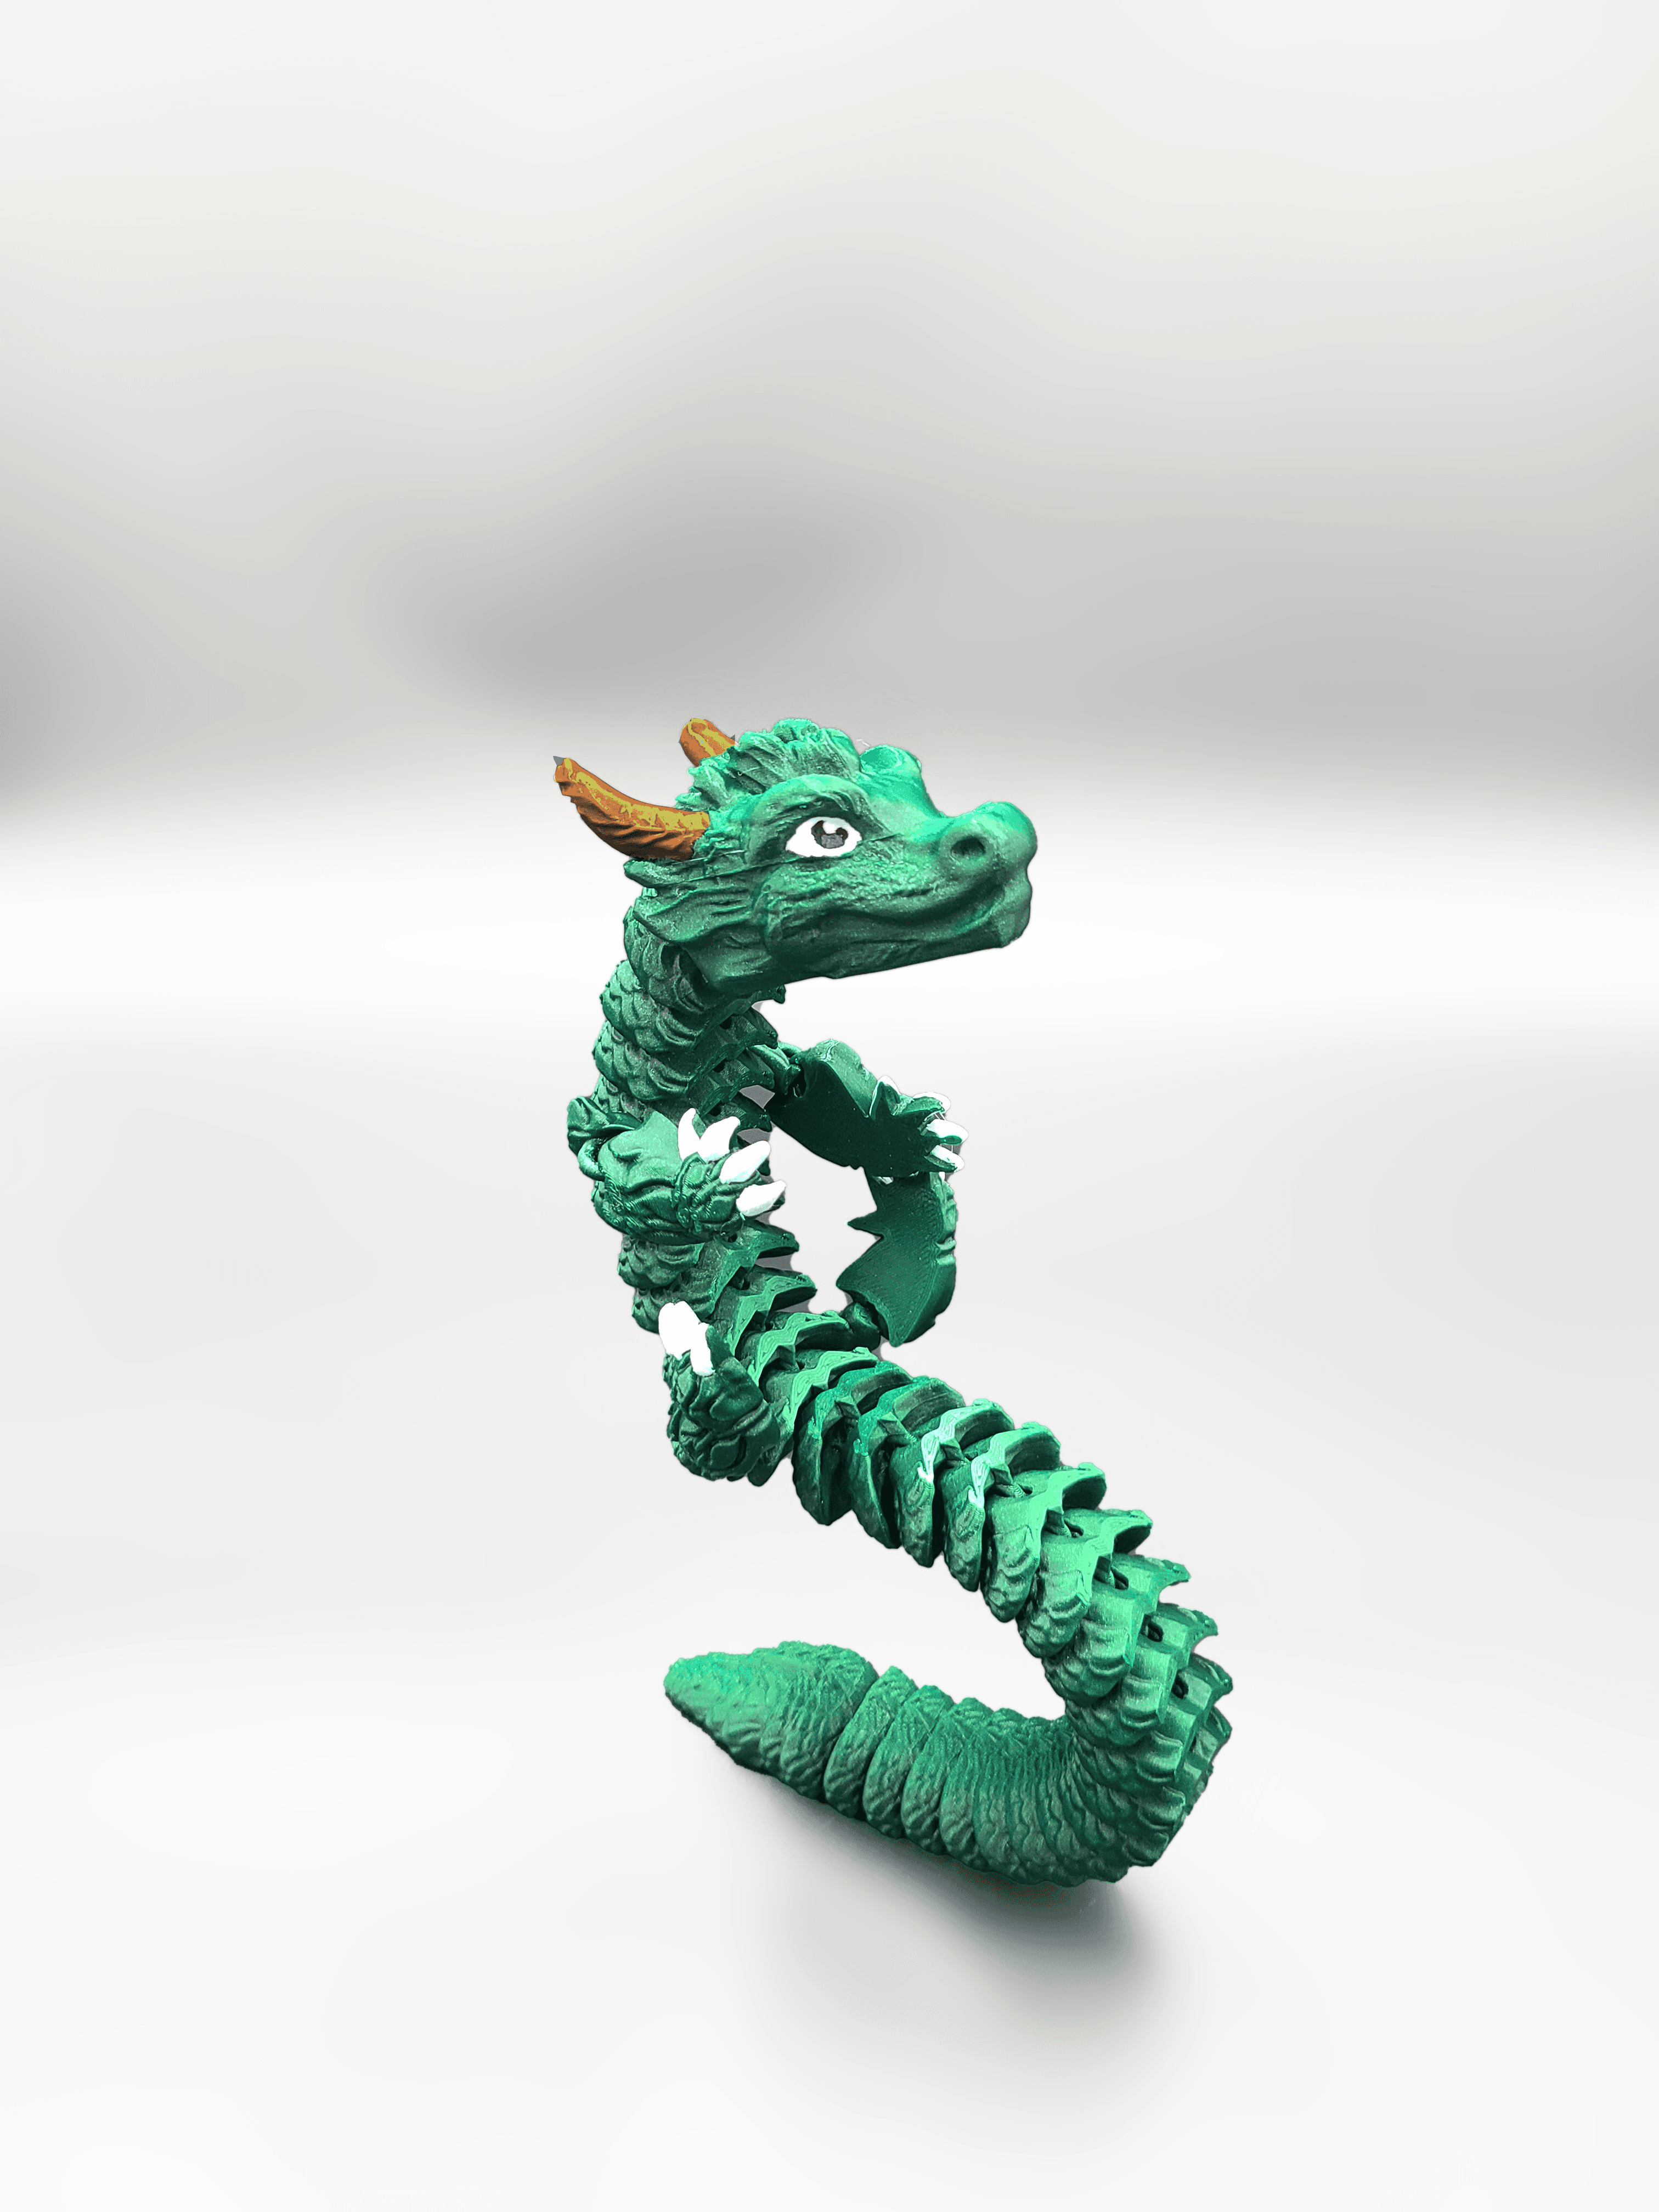 Chip, Wood Dragon - Articulated Dragon Snap-Flex Fidget (Loose Joints) 3d model